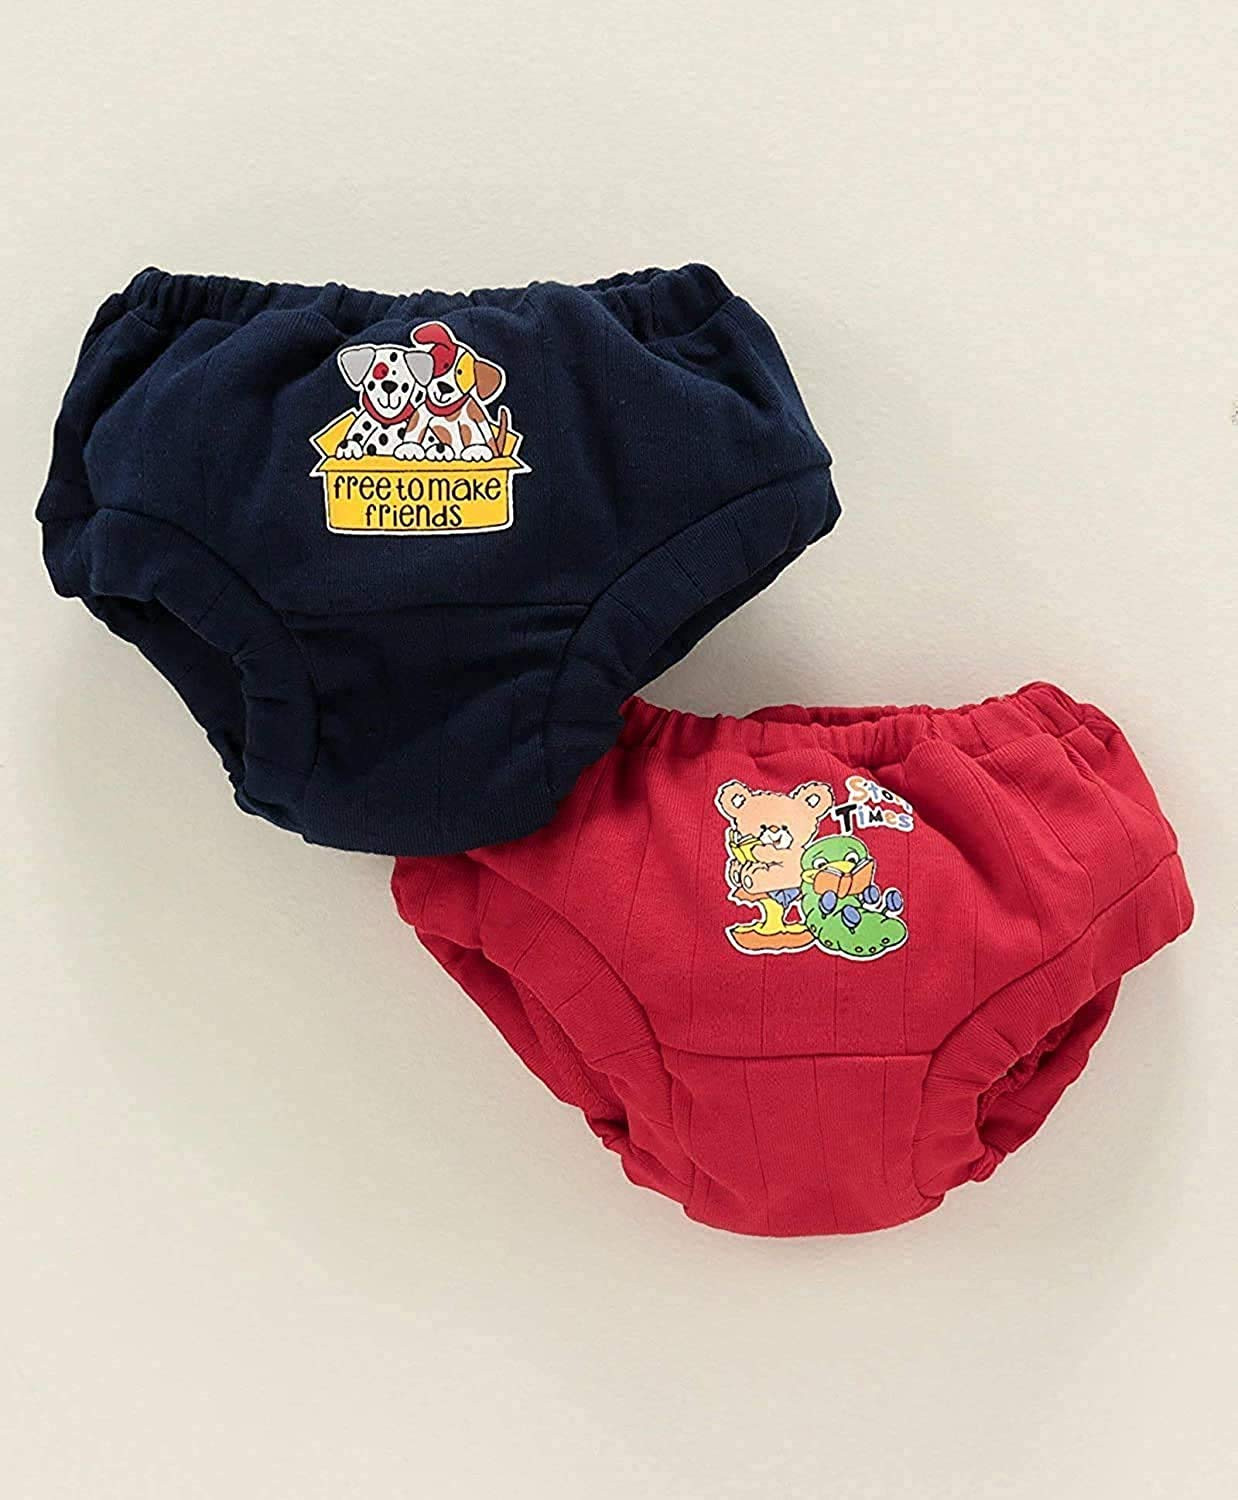 BENAVJI Baby Boys and Baby Girls 100% Organic Cotton Underwear